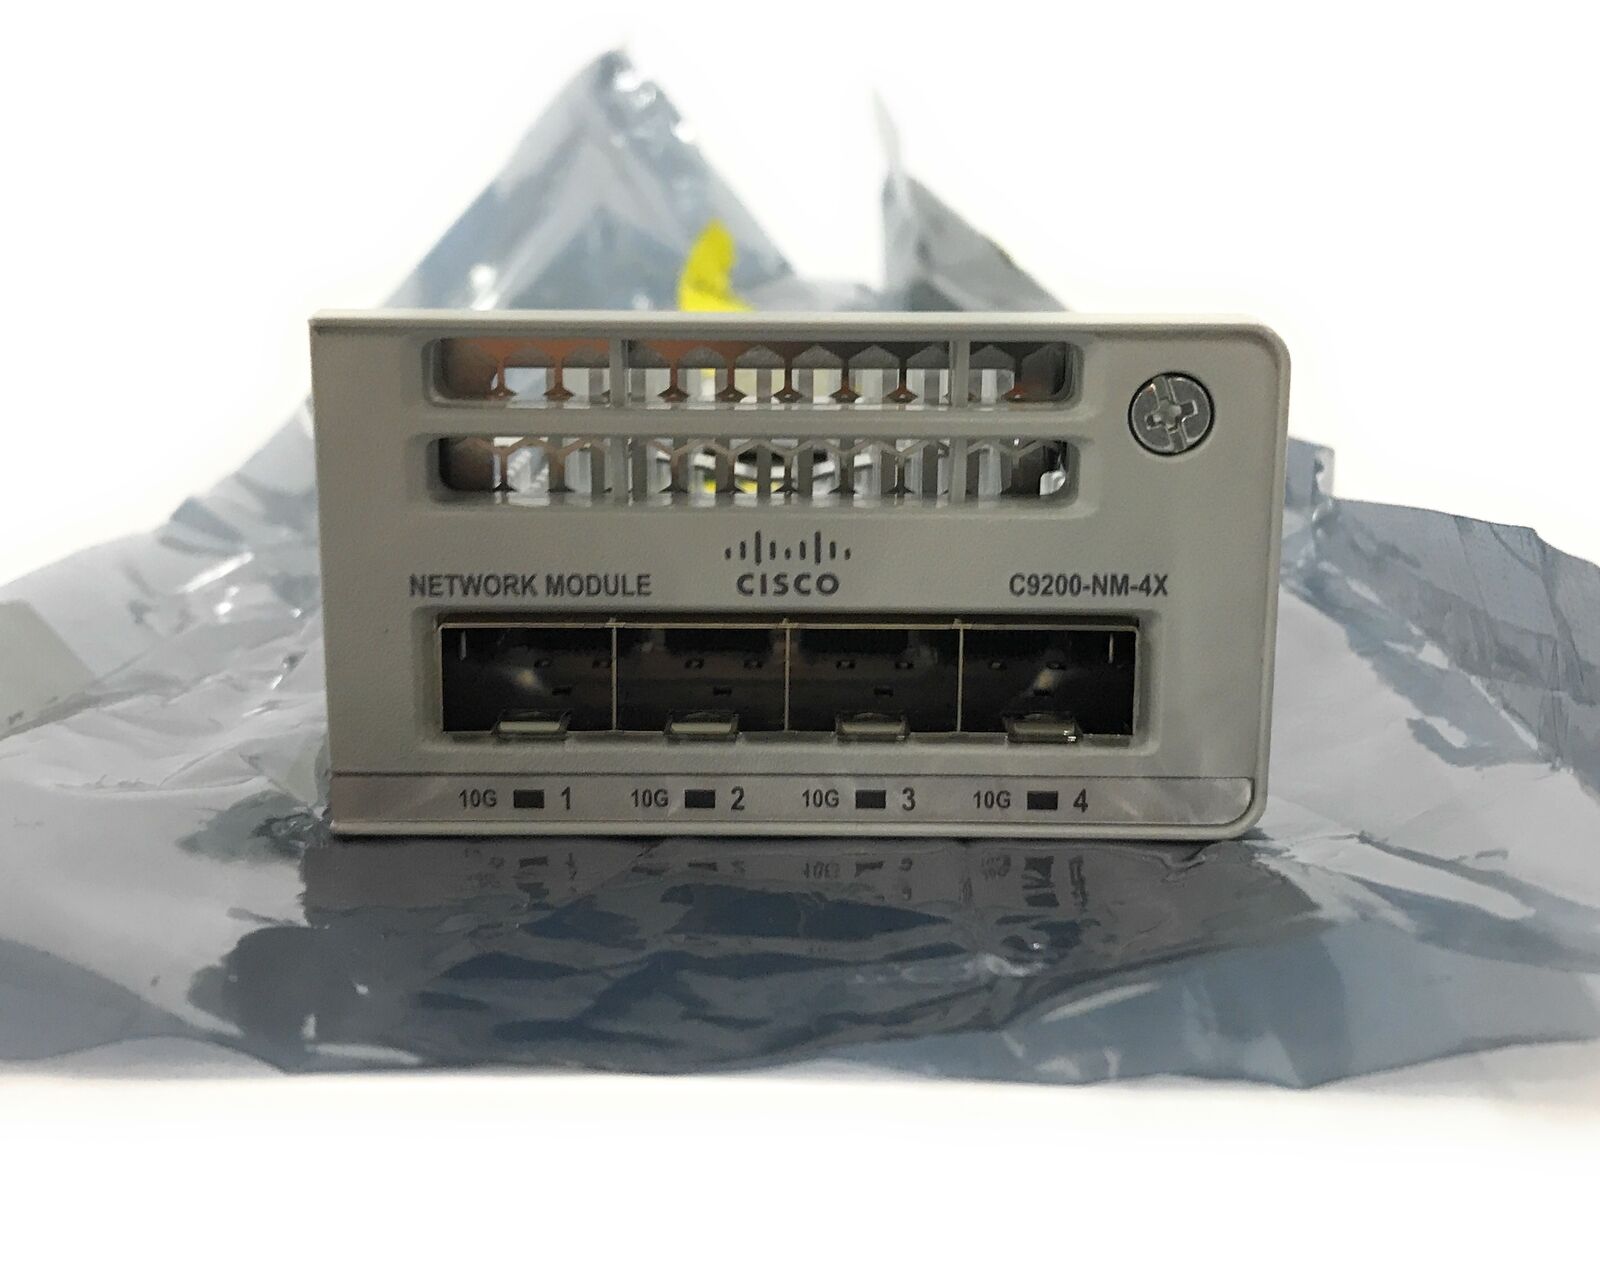 NEW Open Box Cisco C9200-NM-4X Catalyst 9200 Series 4x10GE SFP Network Module